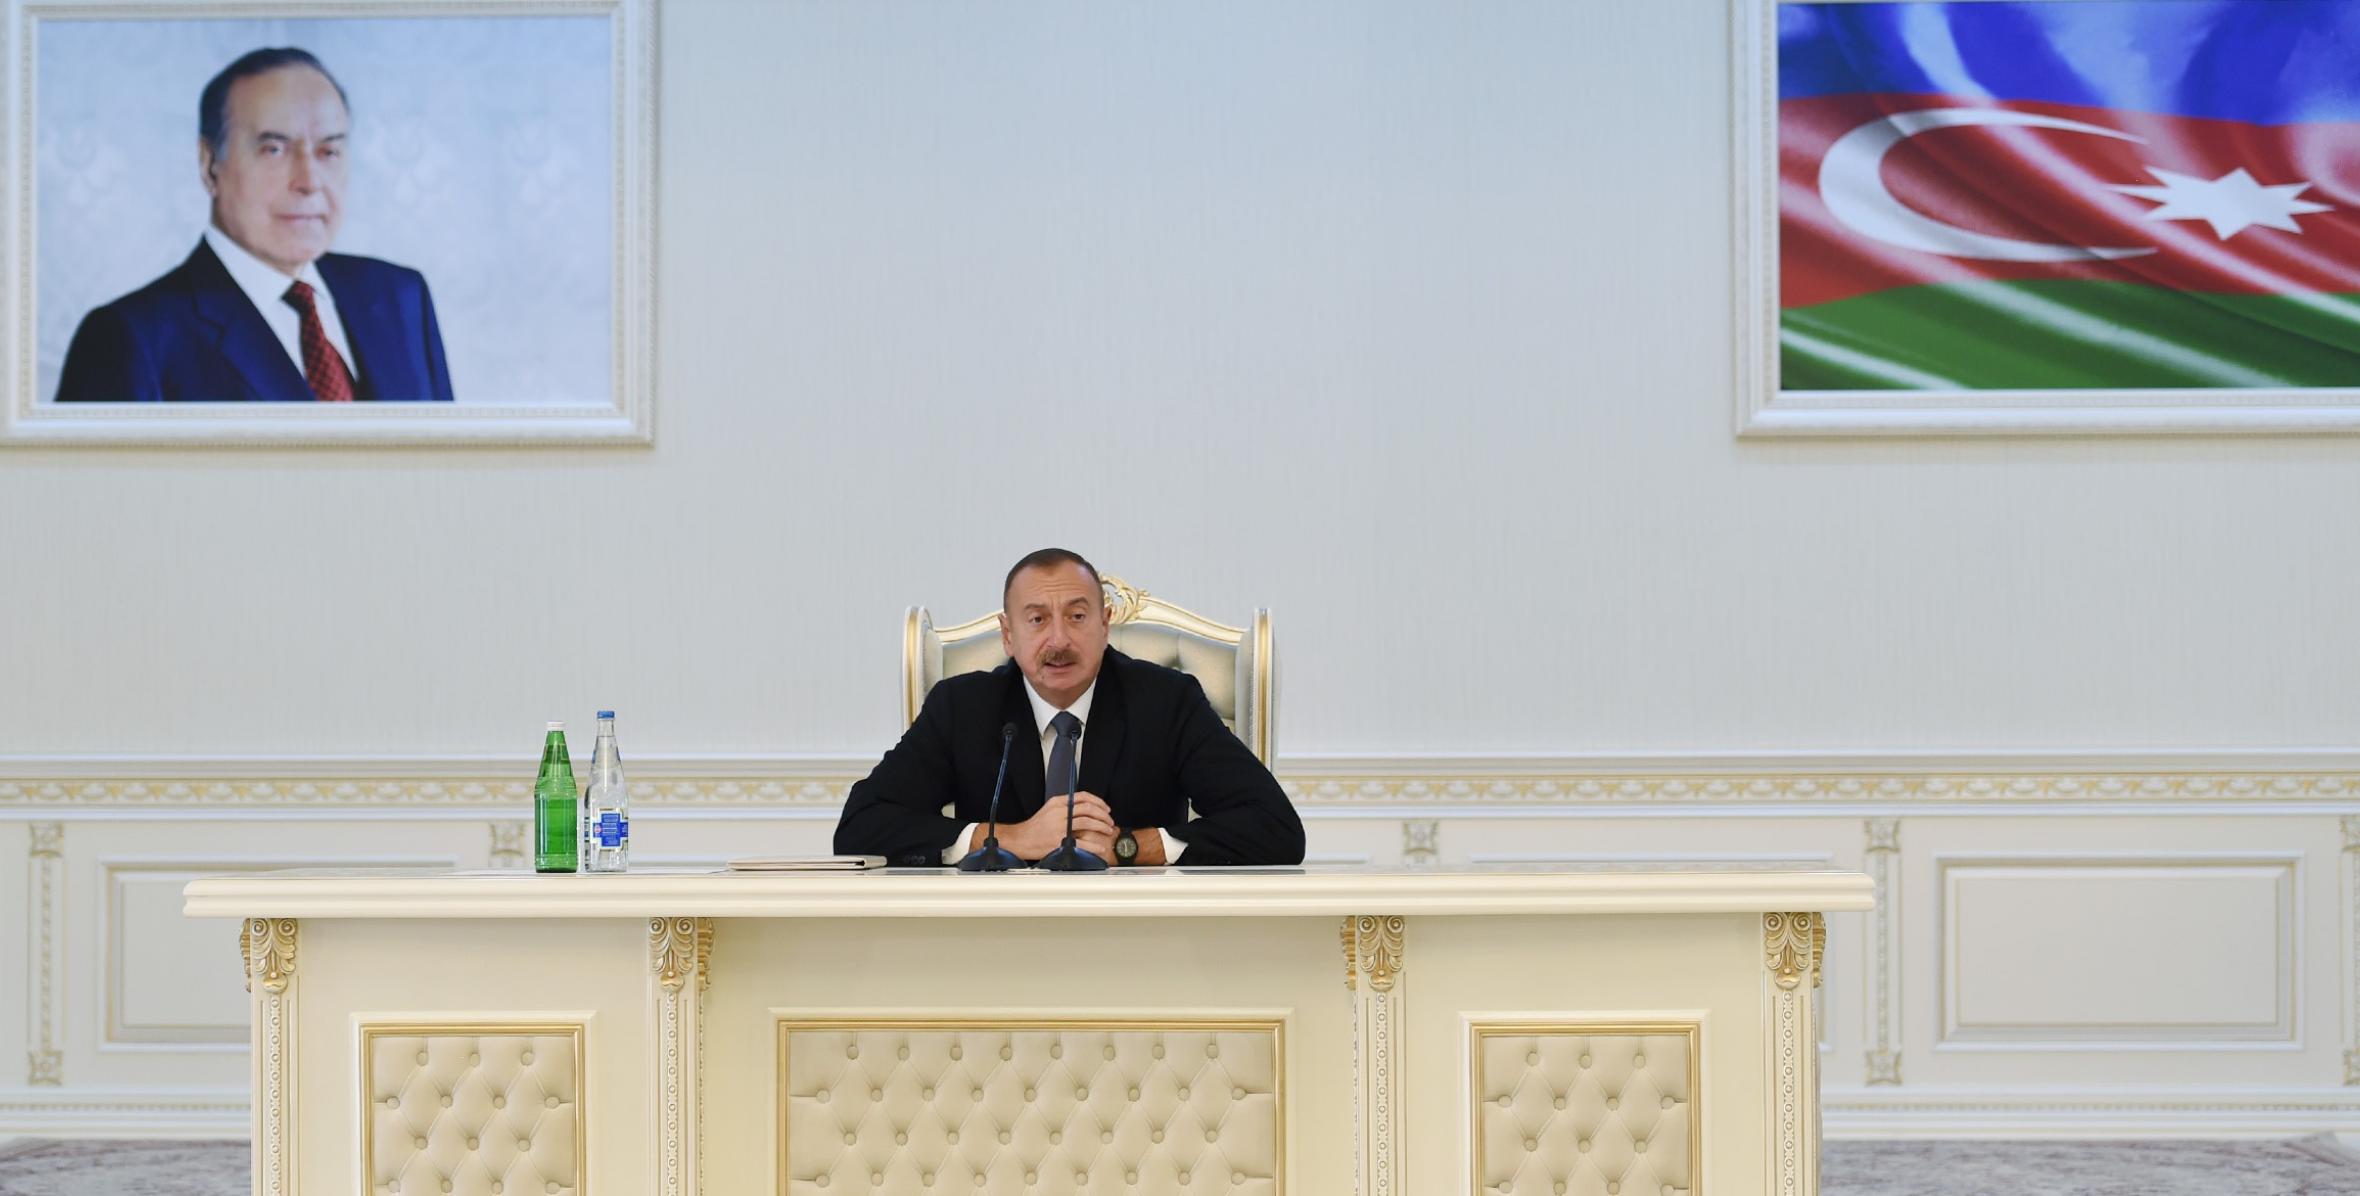 Closing speech by Ilham Aliyev at the opening  Heydar Aliyev Center in Sumgayit